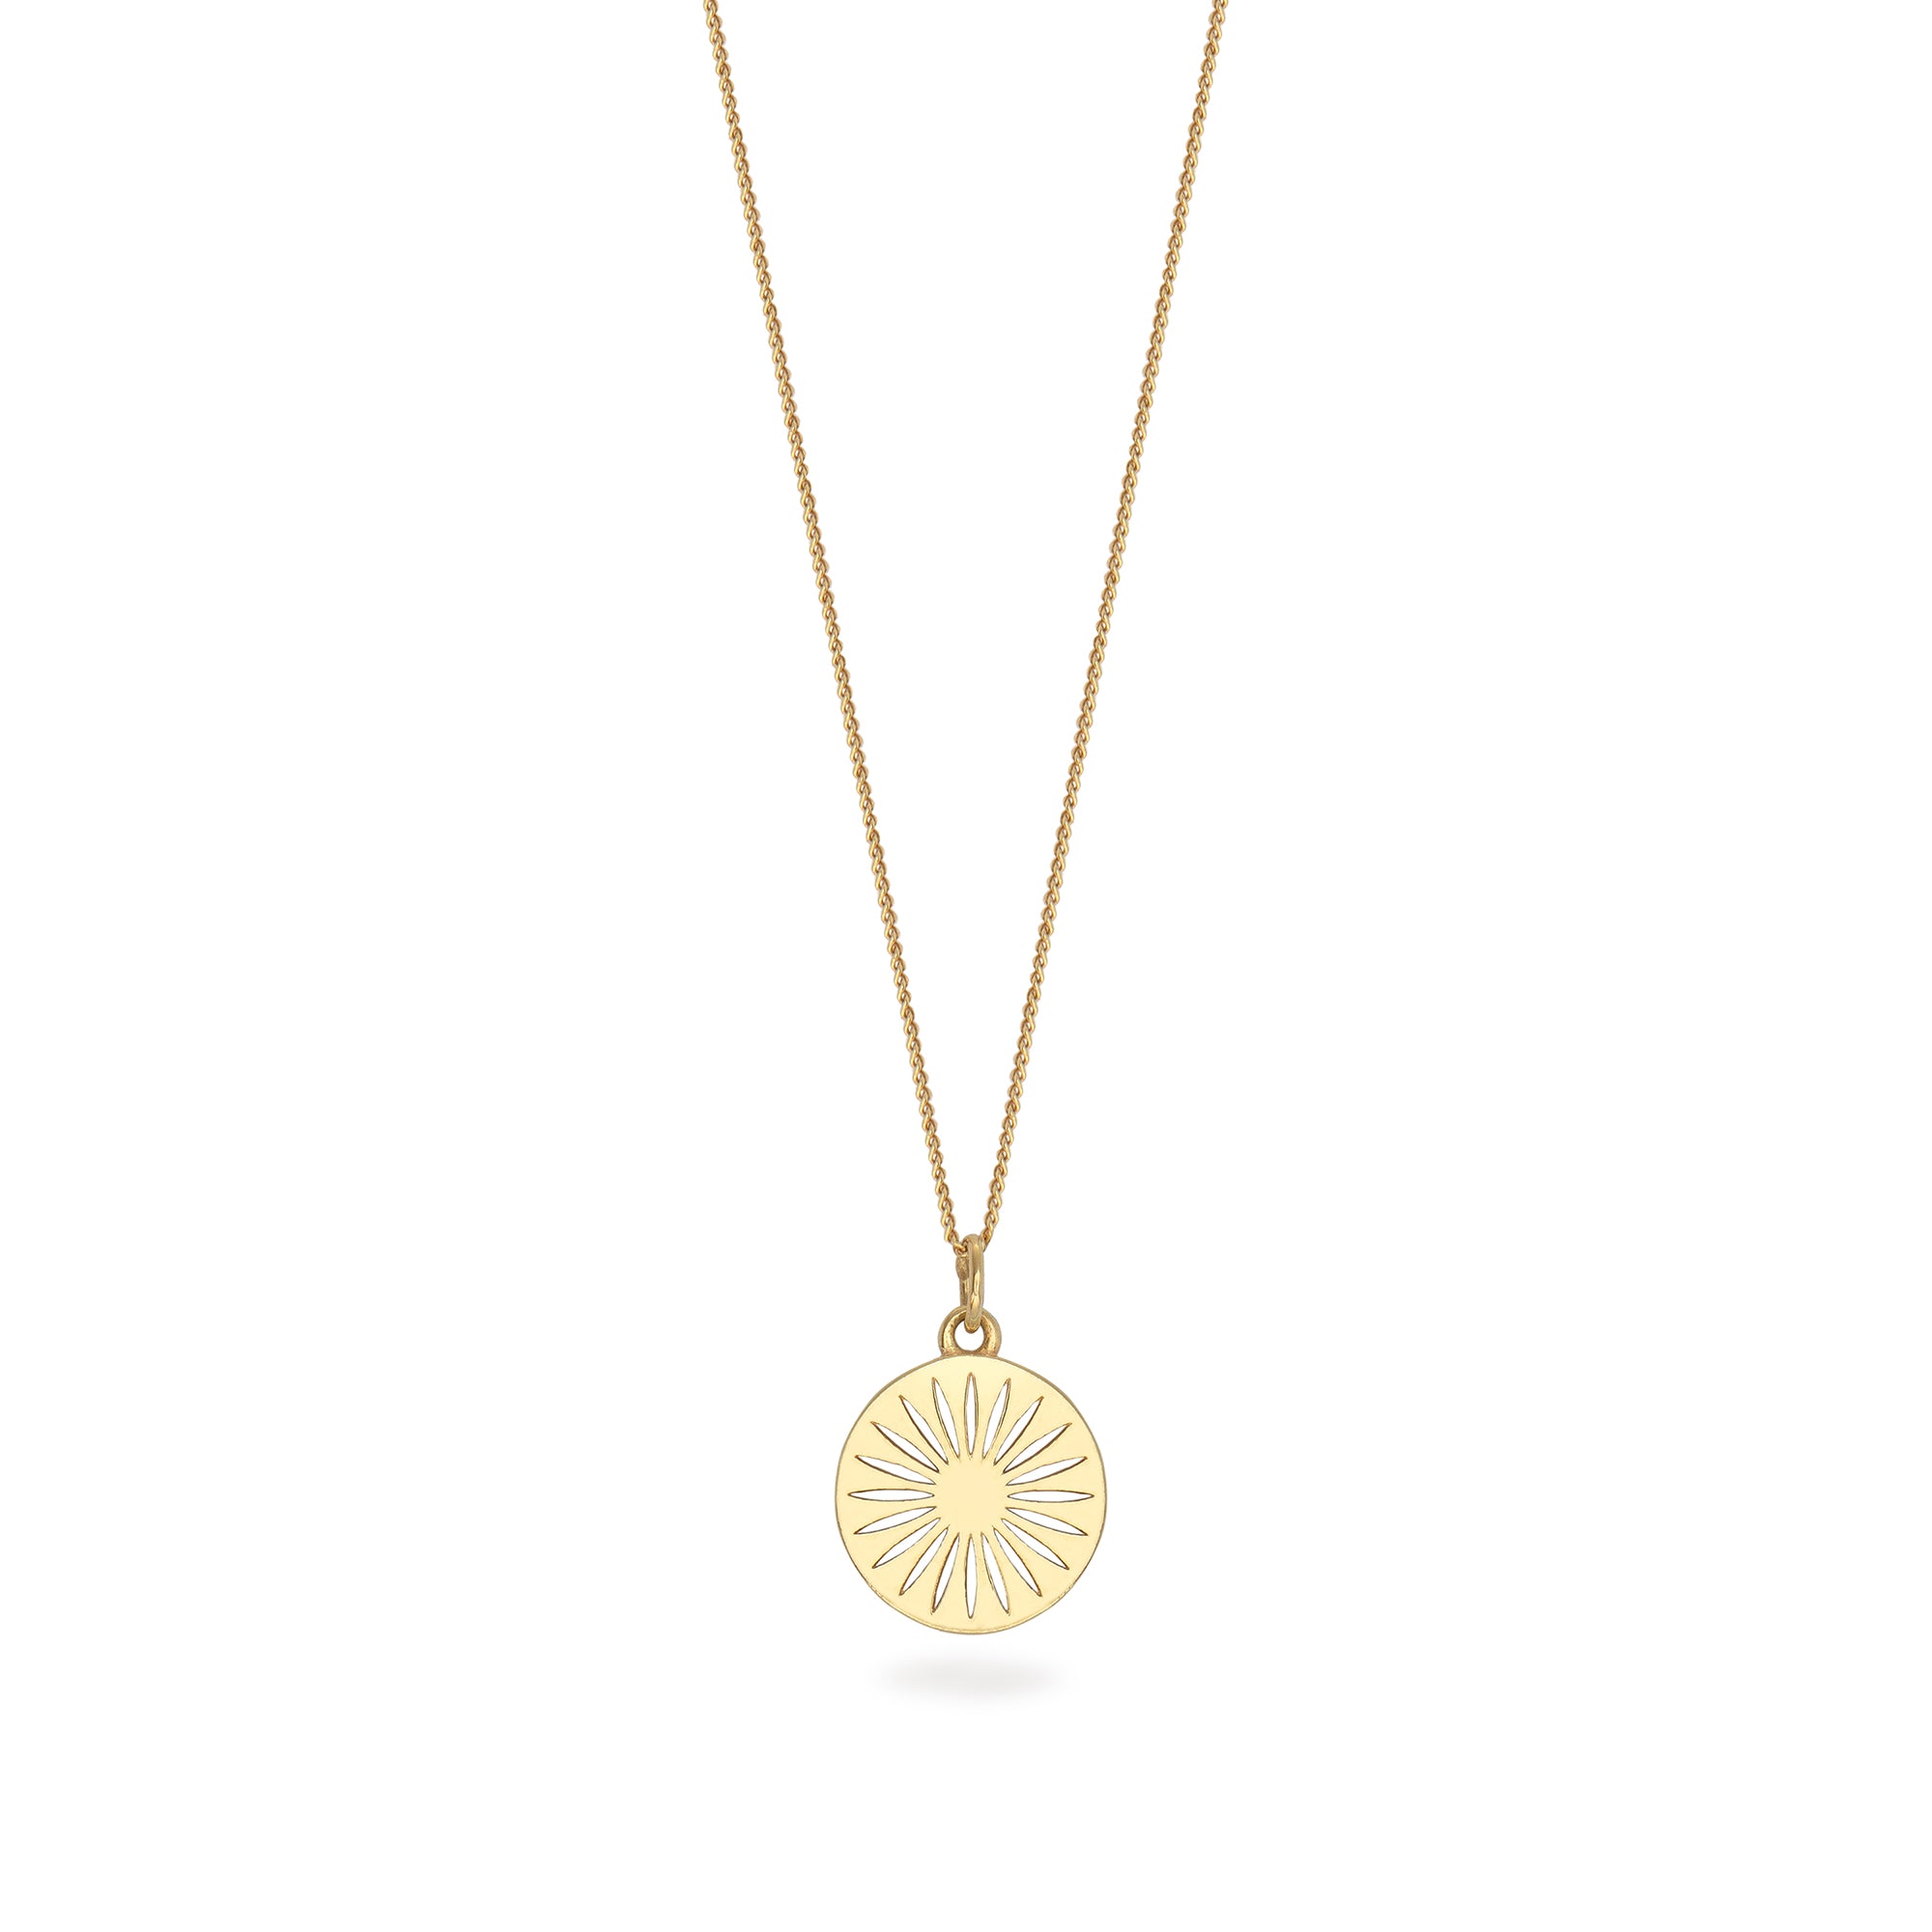 Gold vermeil necklace in daisy design 